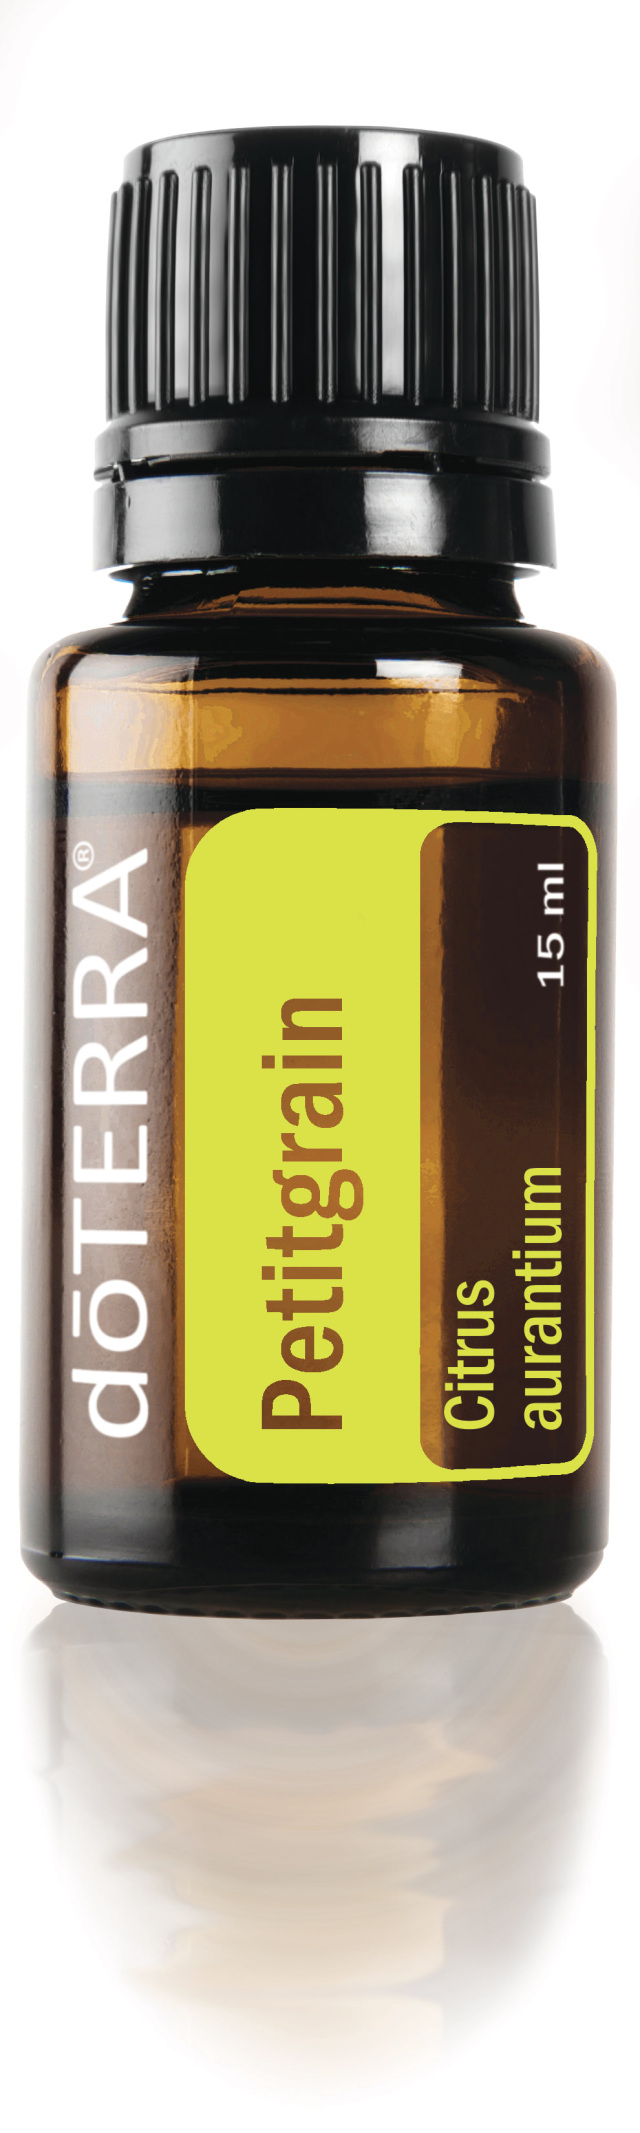 Dōterra Essential Oils